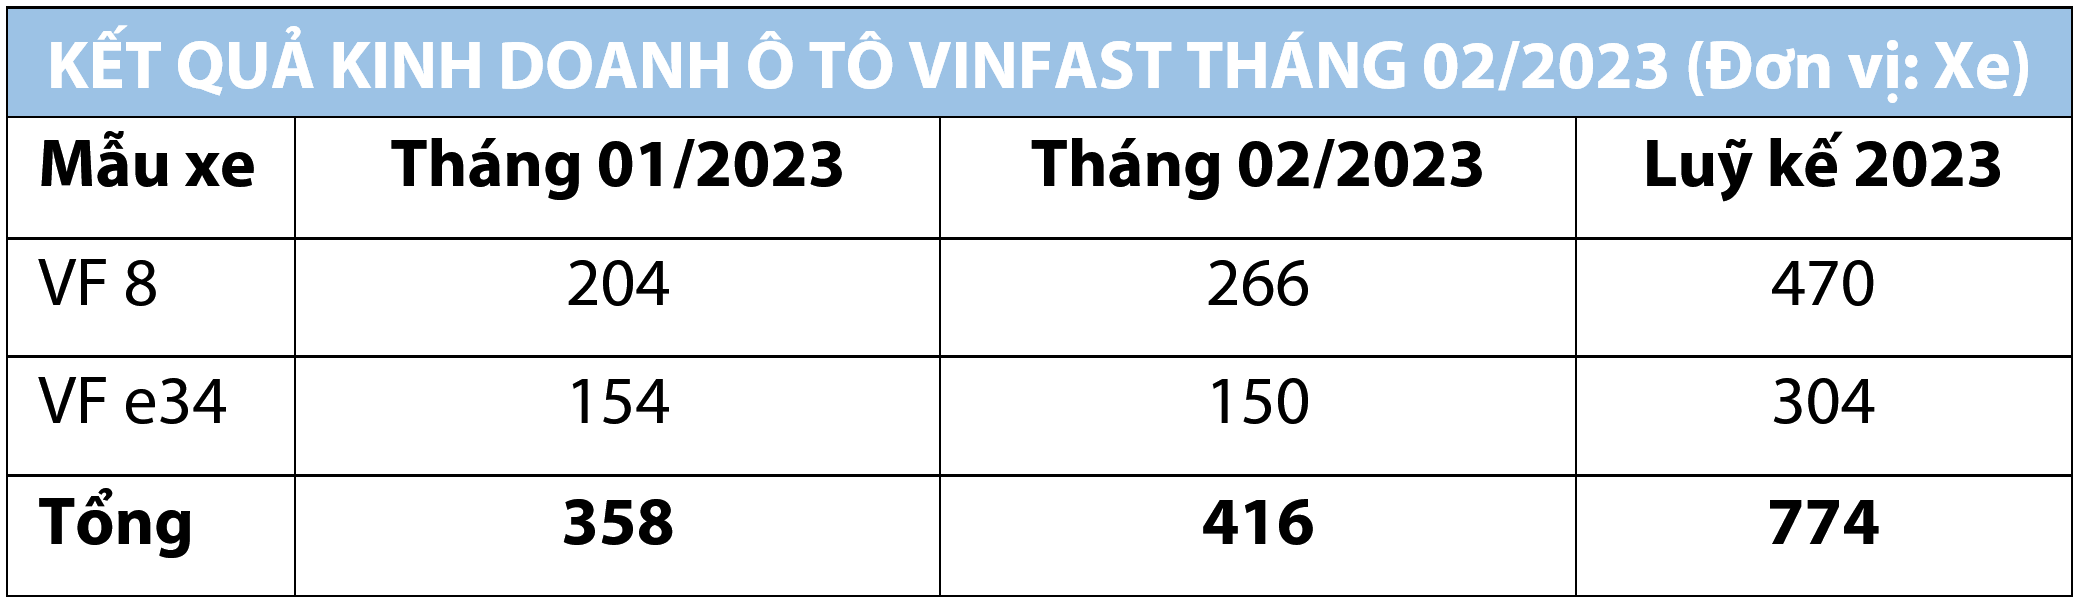 doanhso-vinfast-t2-2023.PNG